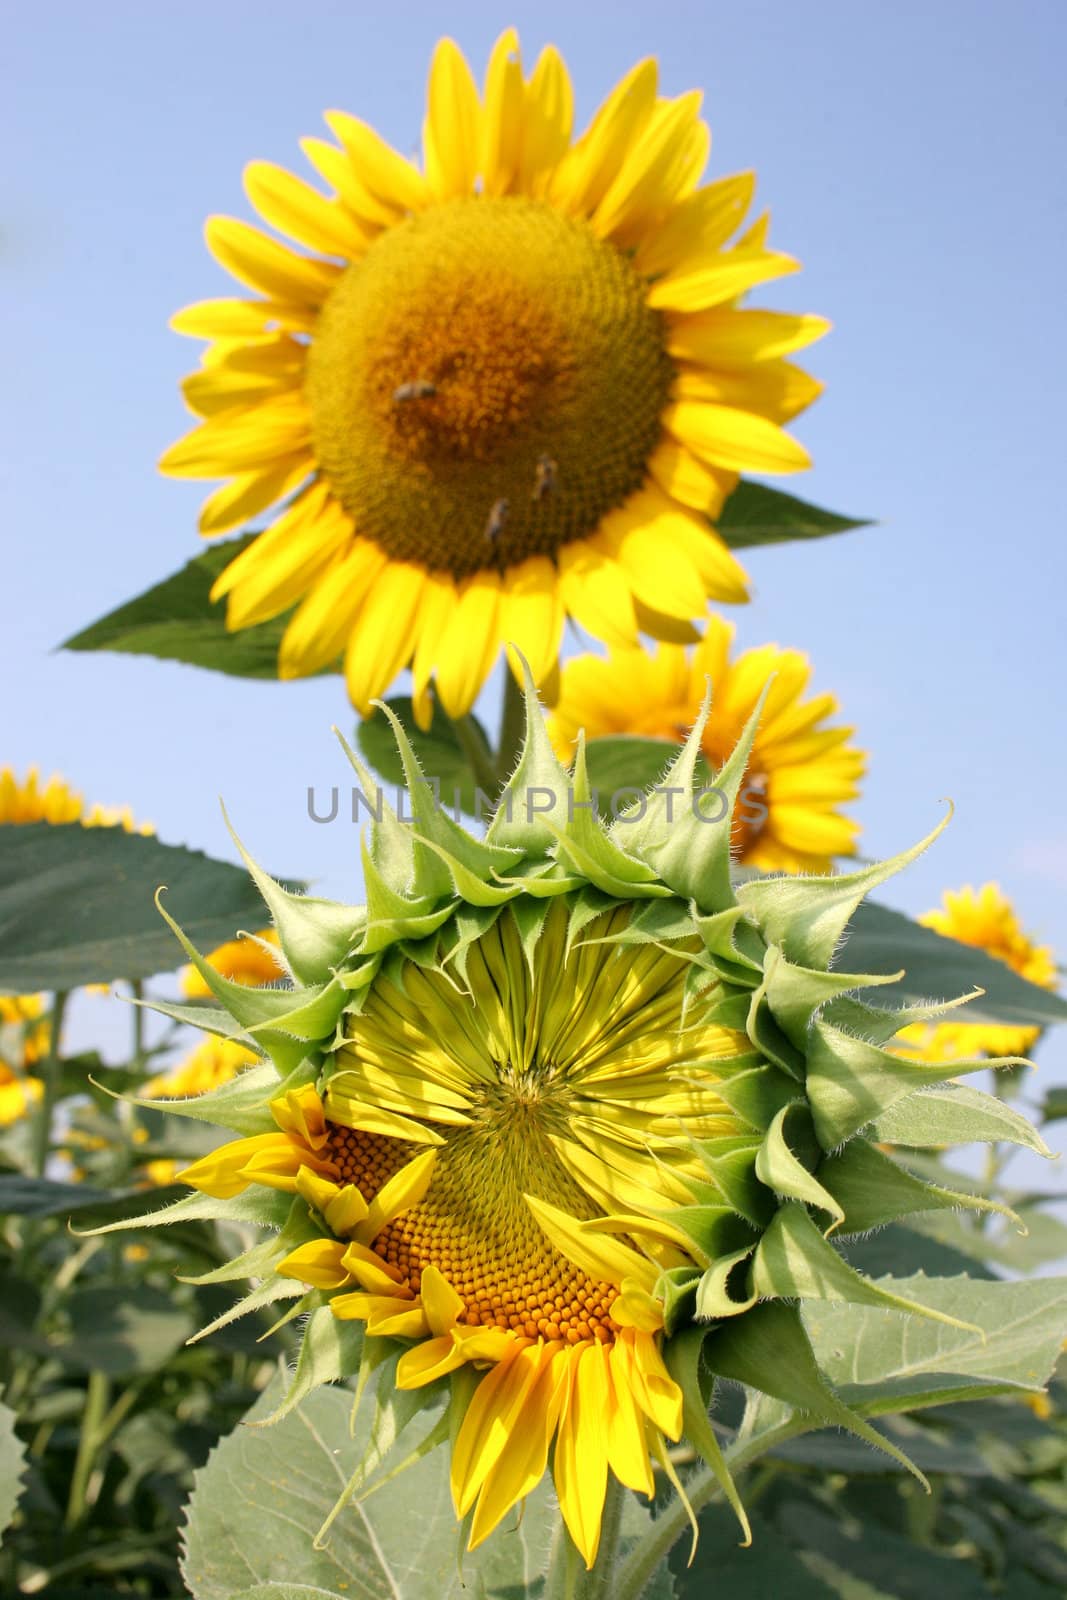 sunflower and sunflower bud